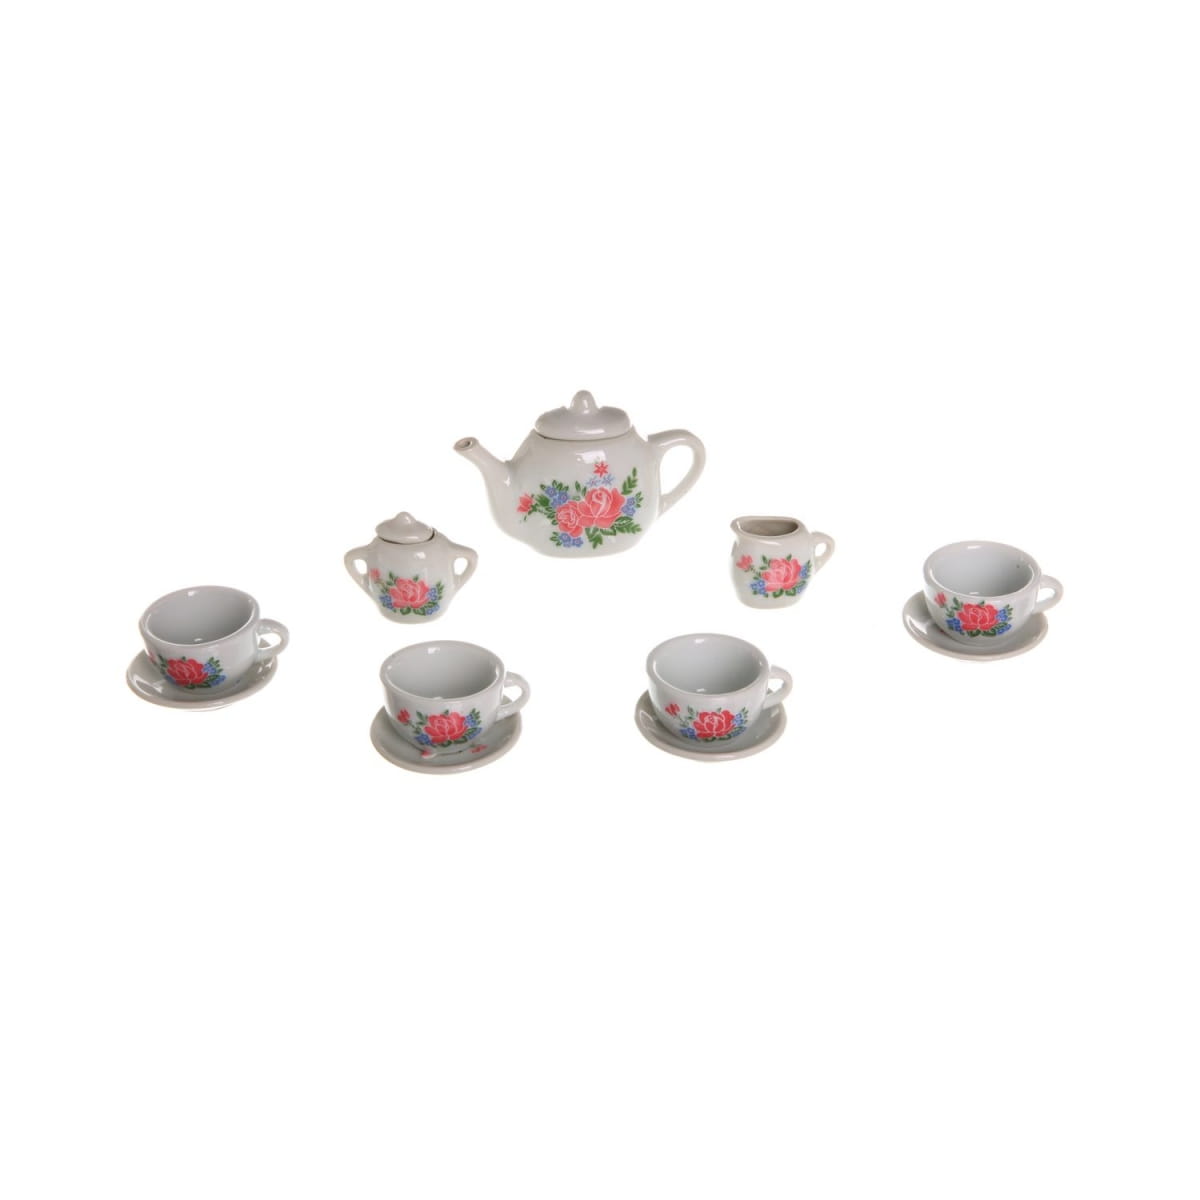     Shenzhen Toys Porcelain Tea Set -  (13 )